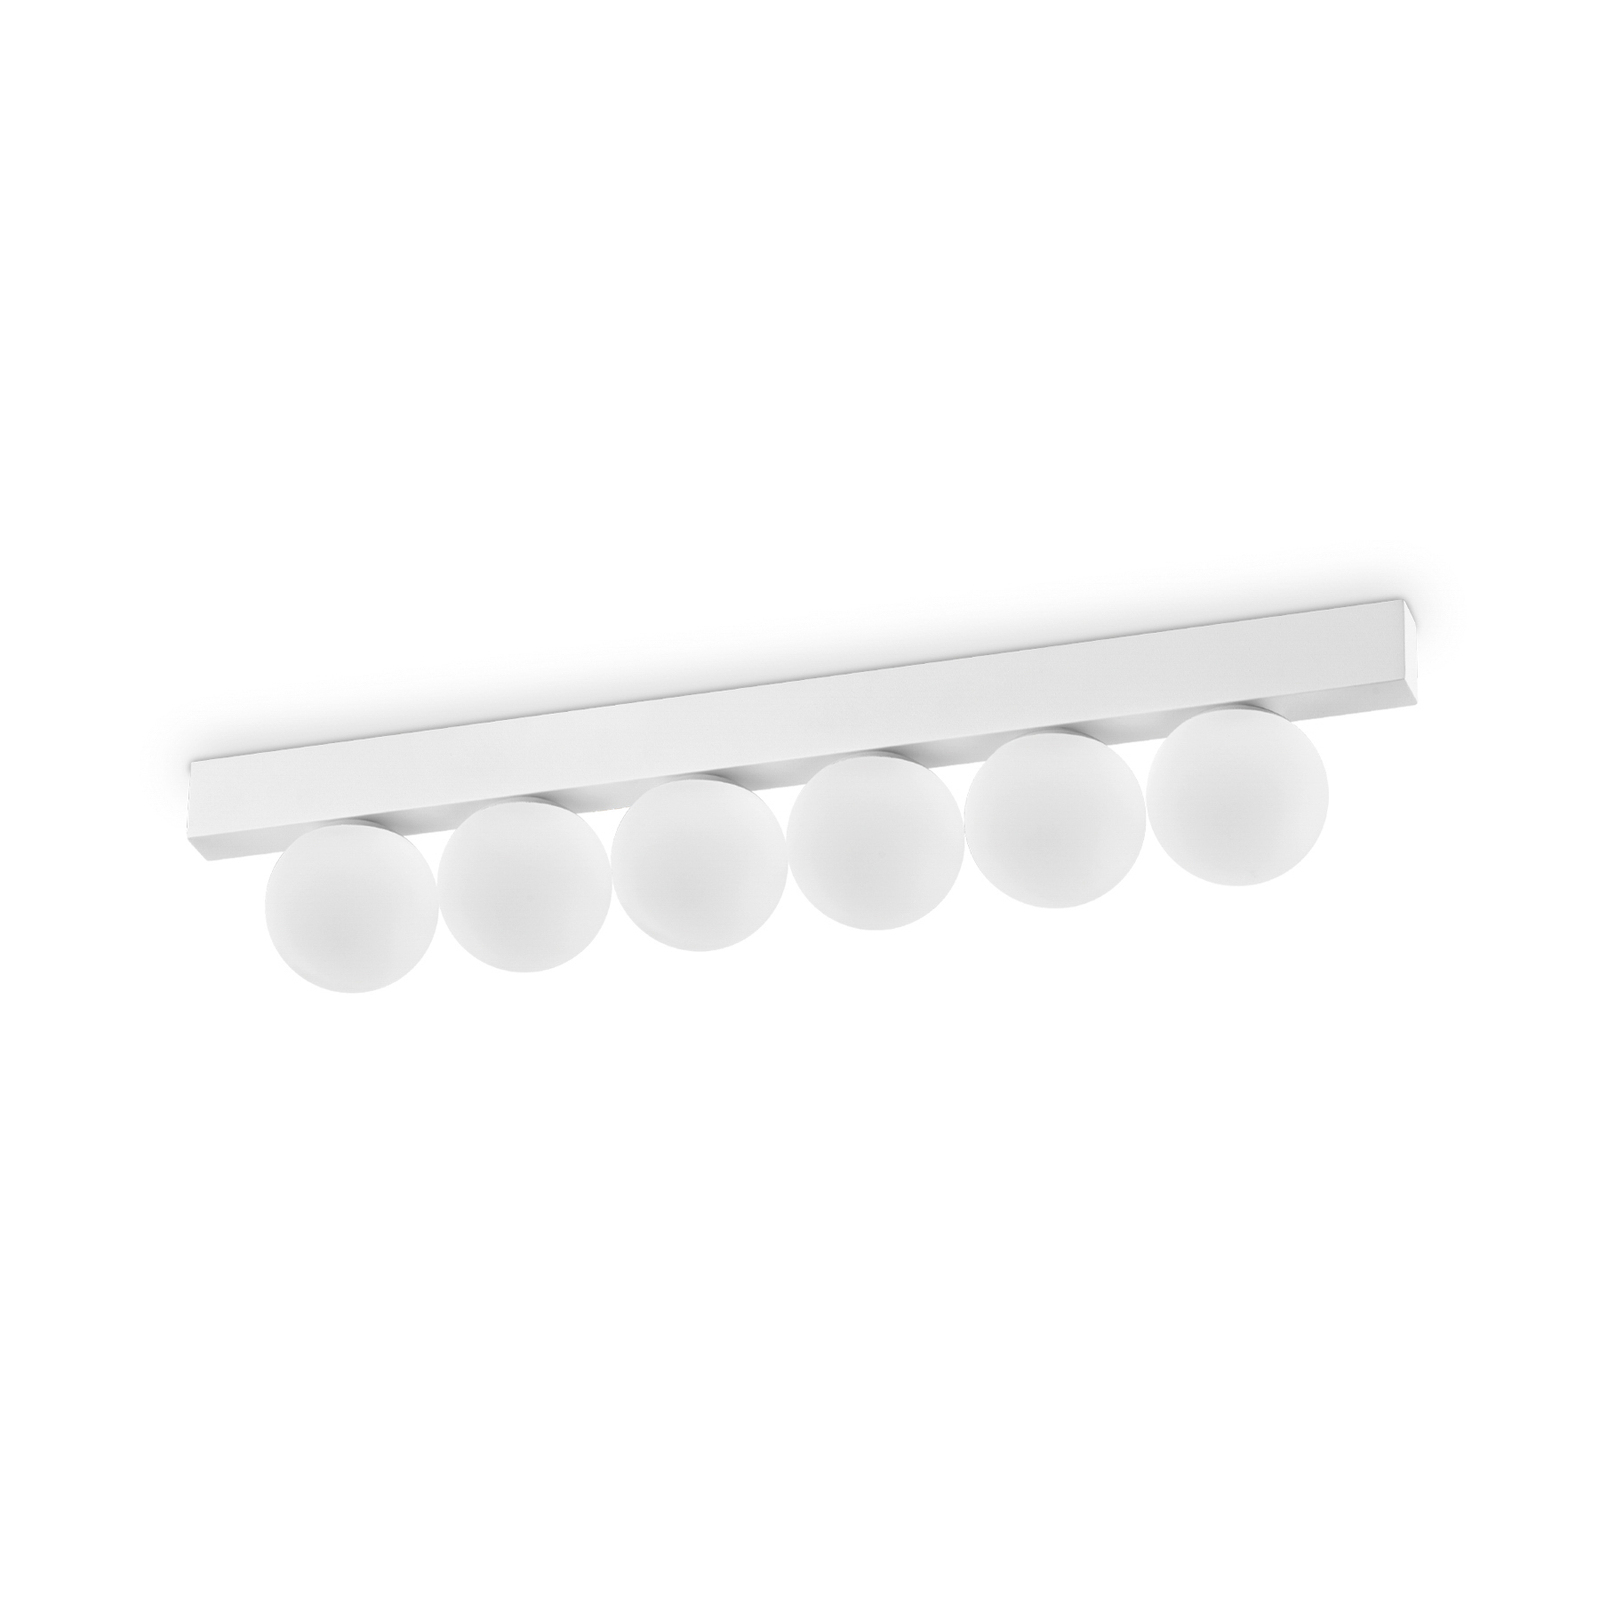 Ideal Lux LED-Deckenlampe Ping Pong weiß 6-flammig, Opalglas